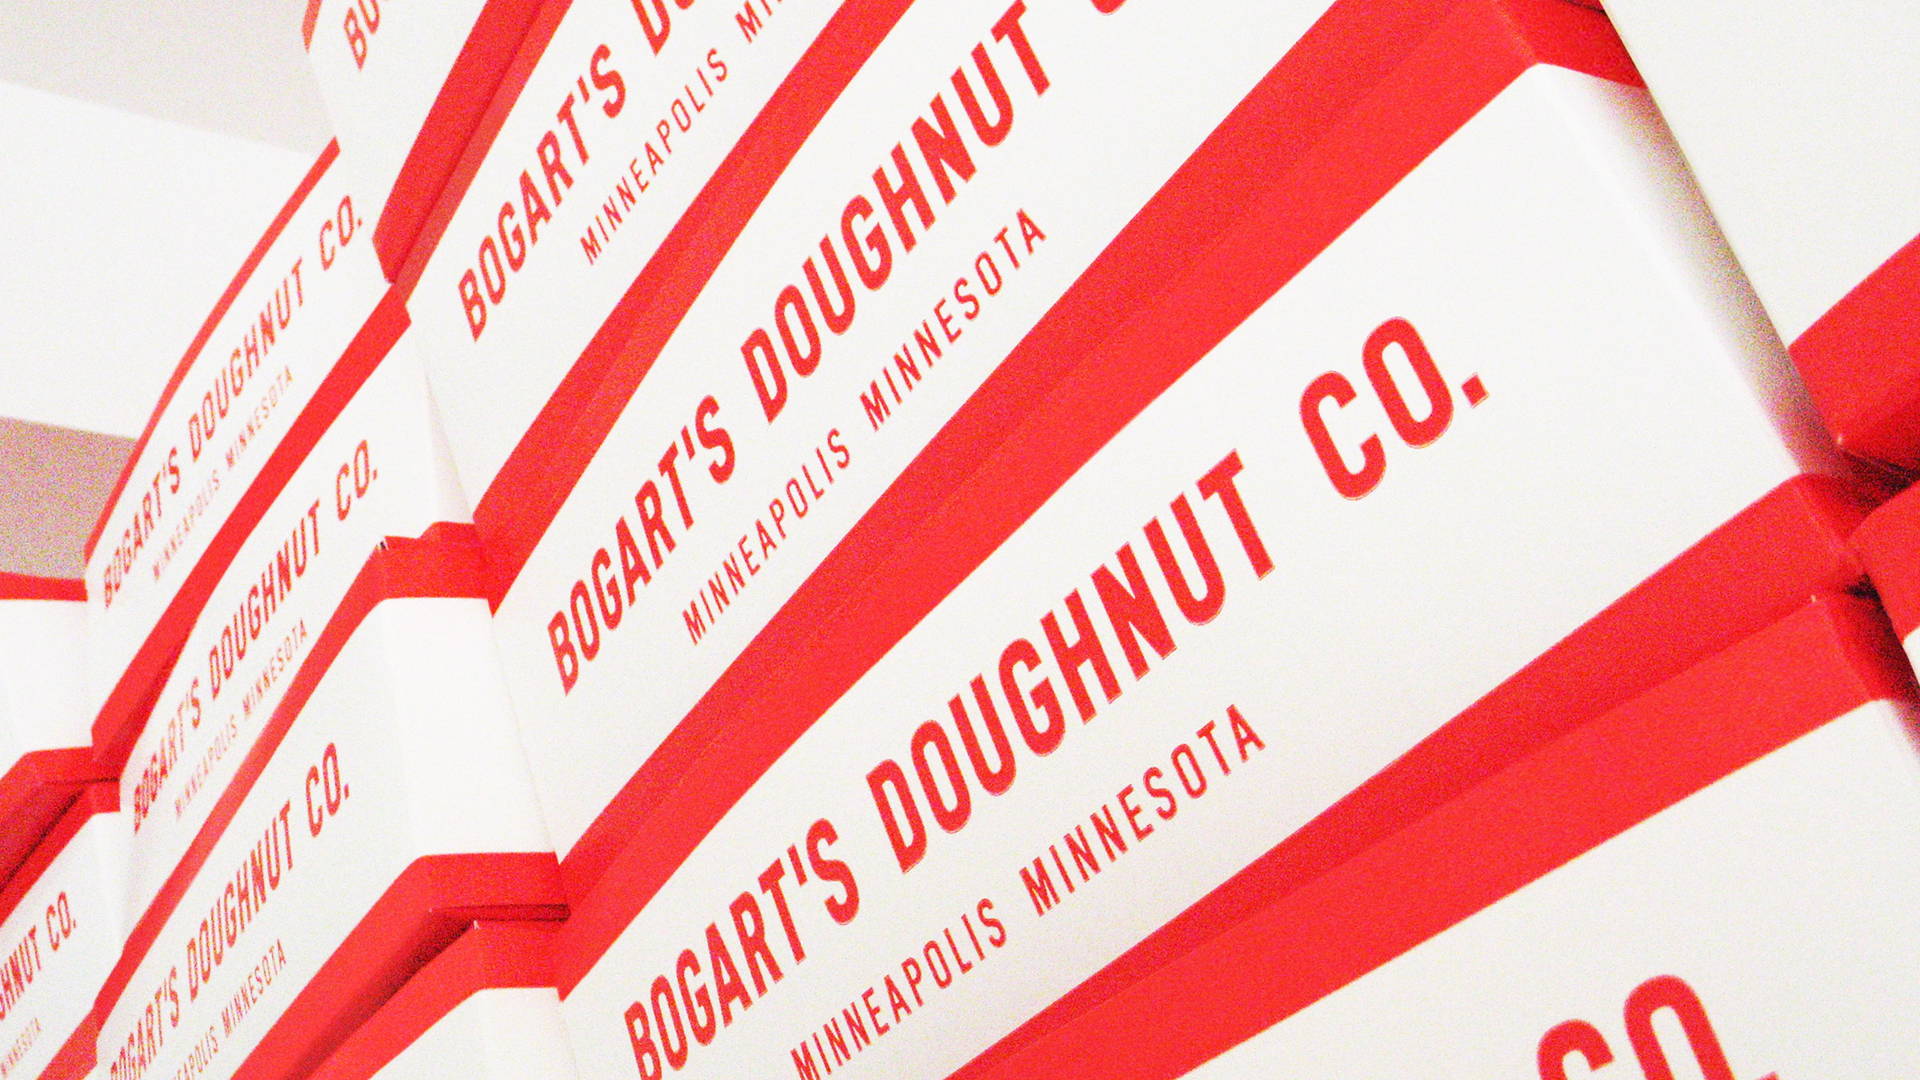 Featured image for Bogart's Doughnut Co.